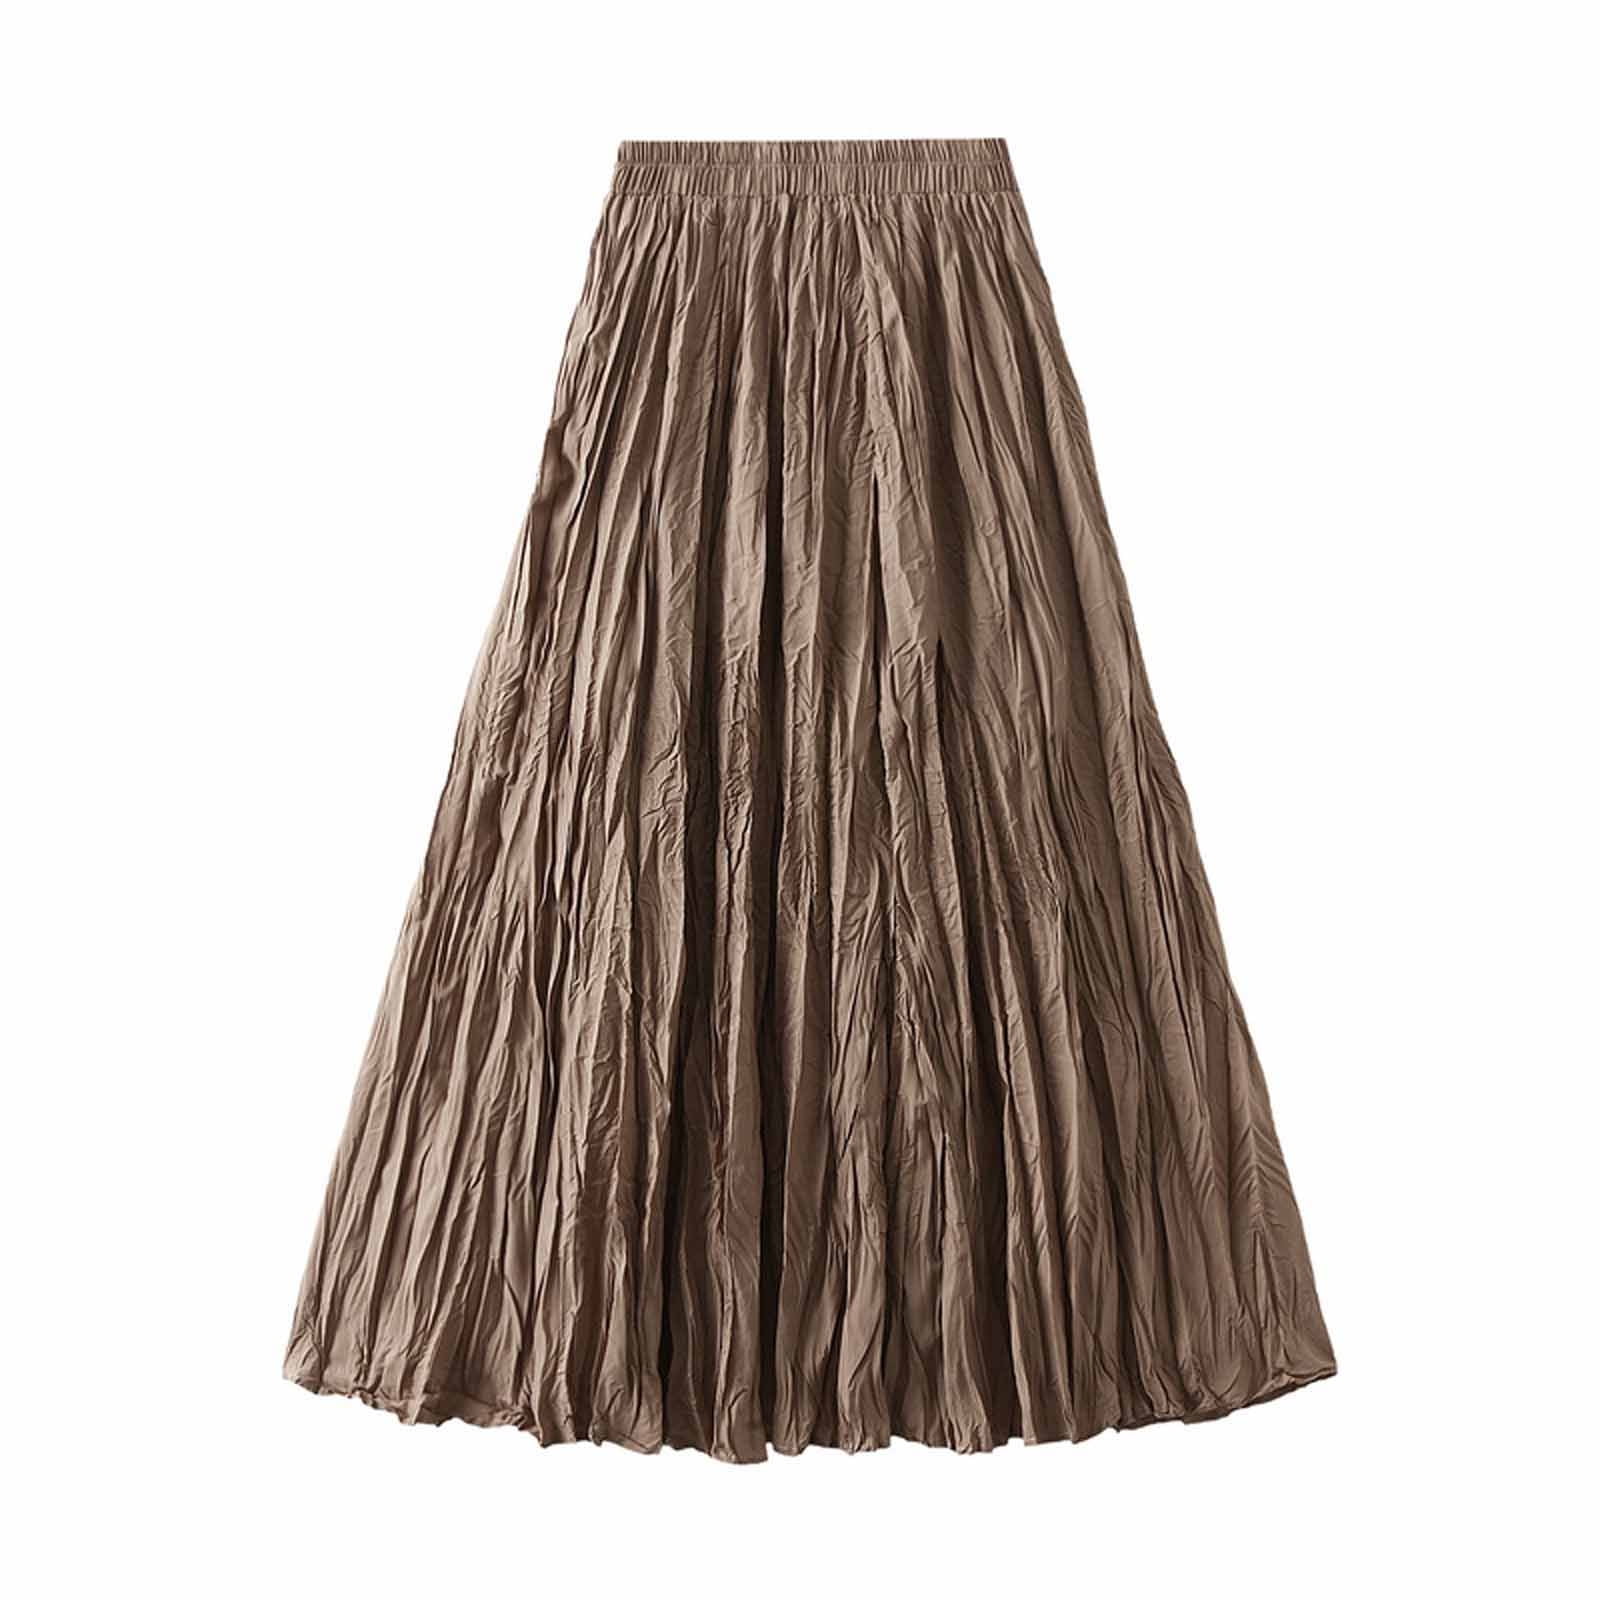 Summer Skirts for Women Fashion Classic Flowy Skirt Maxi Swing Skirt ...